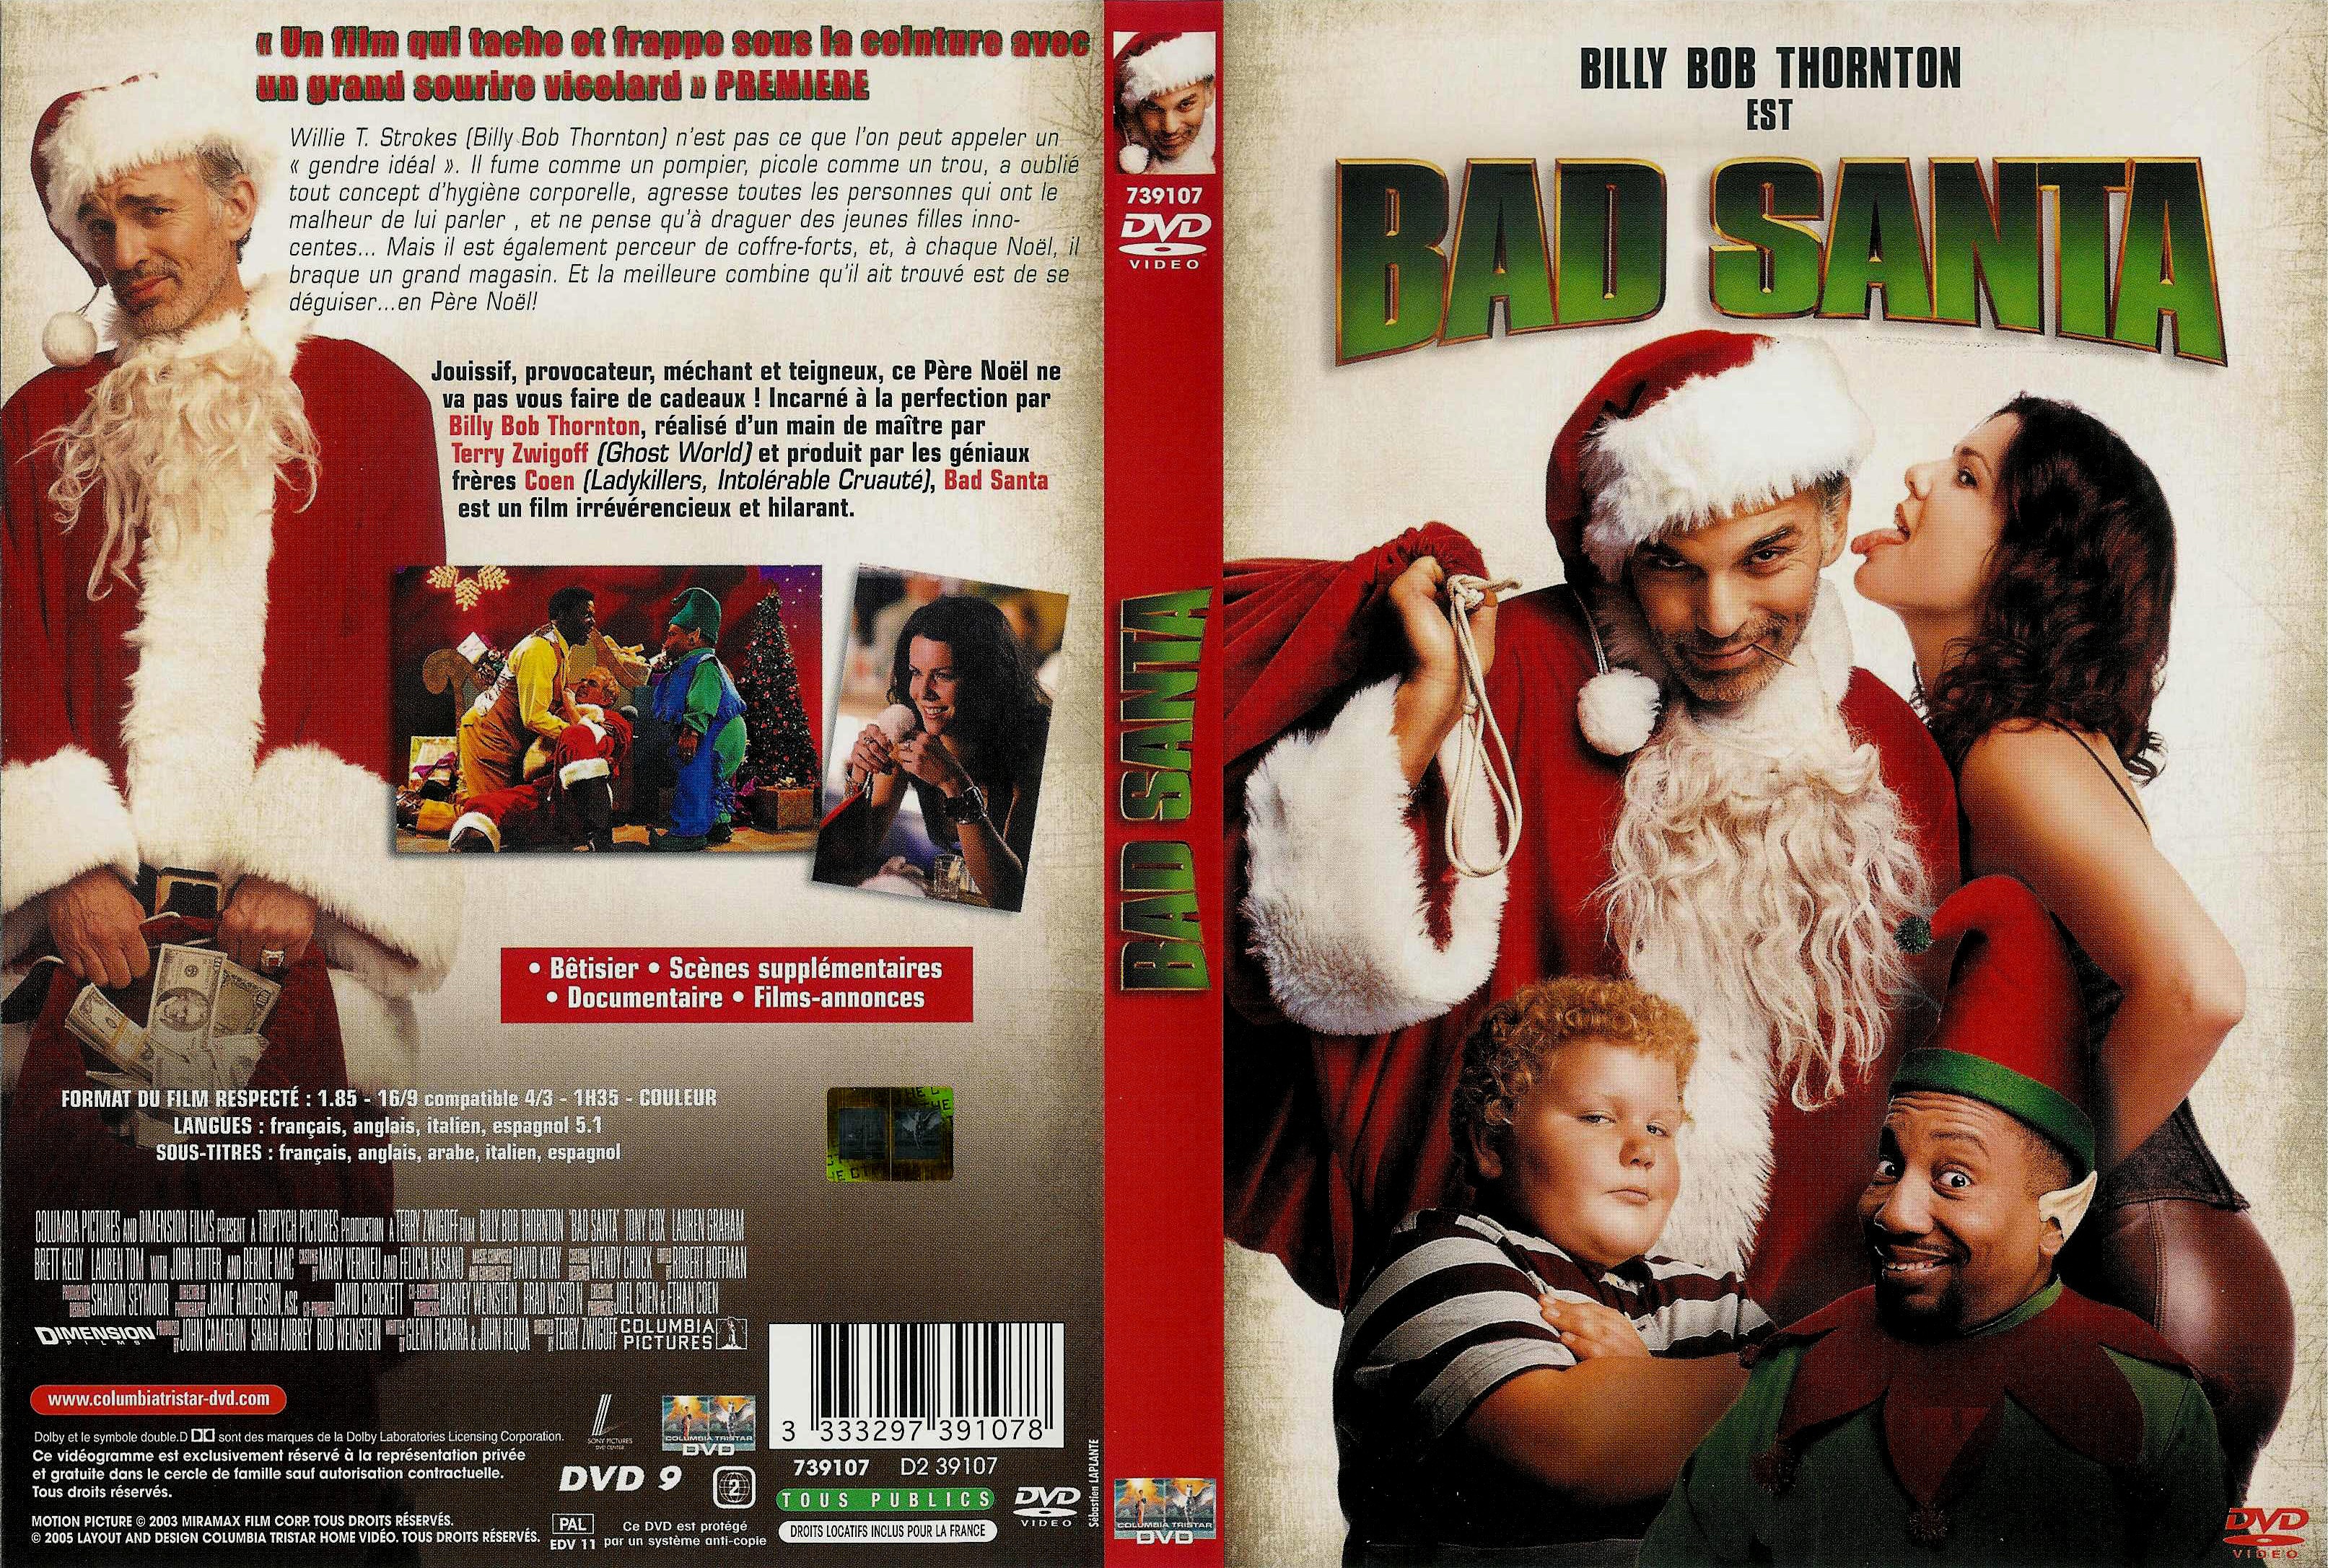 Jaquette DVD Bad Santa